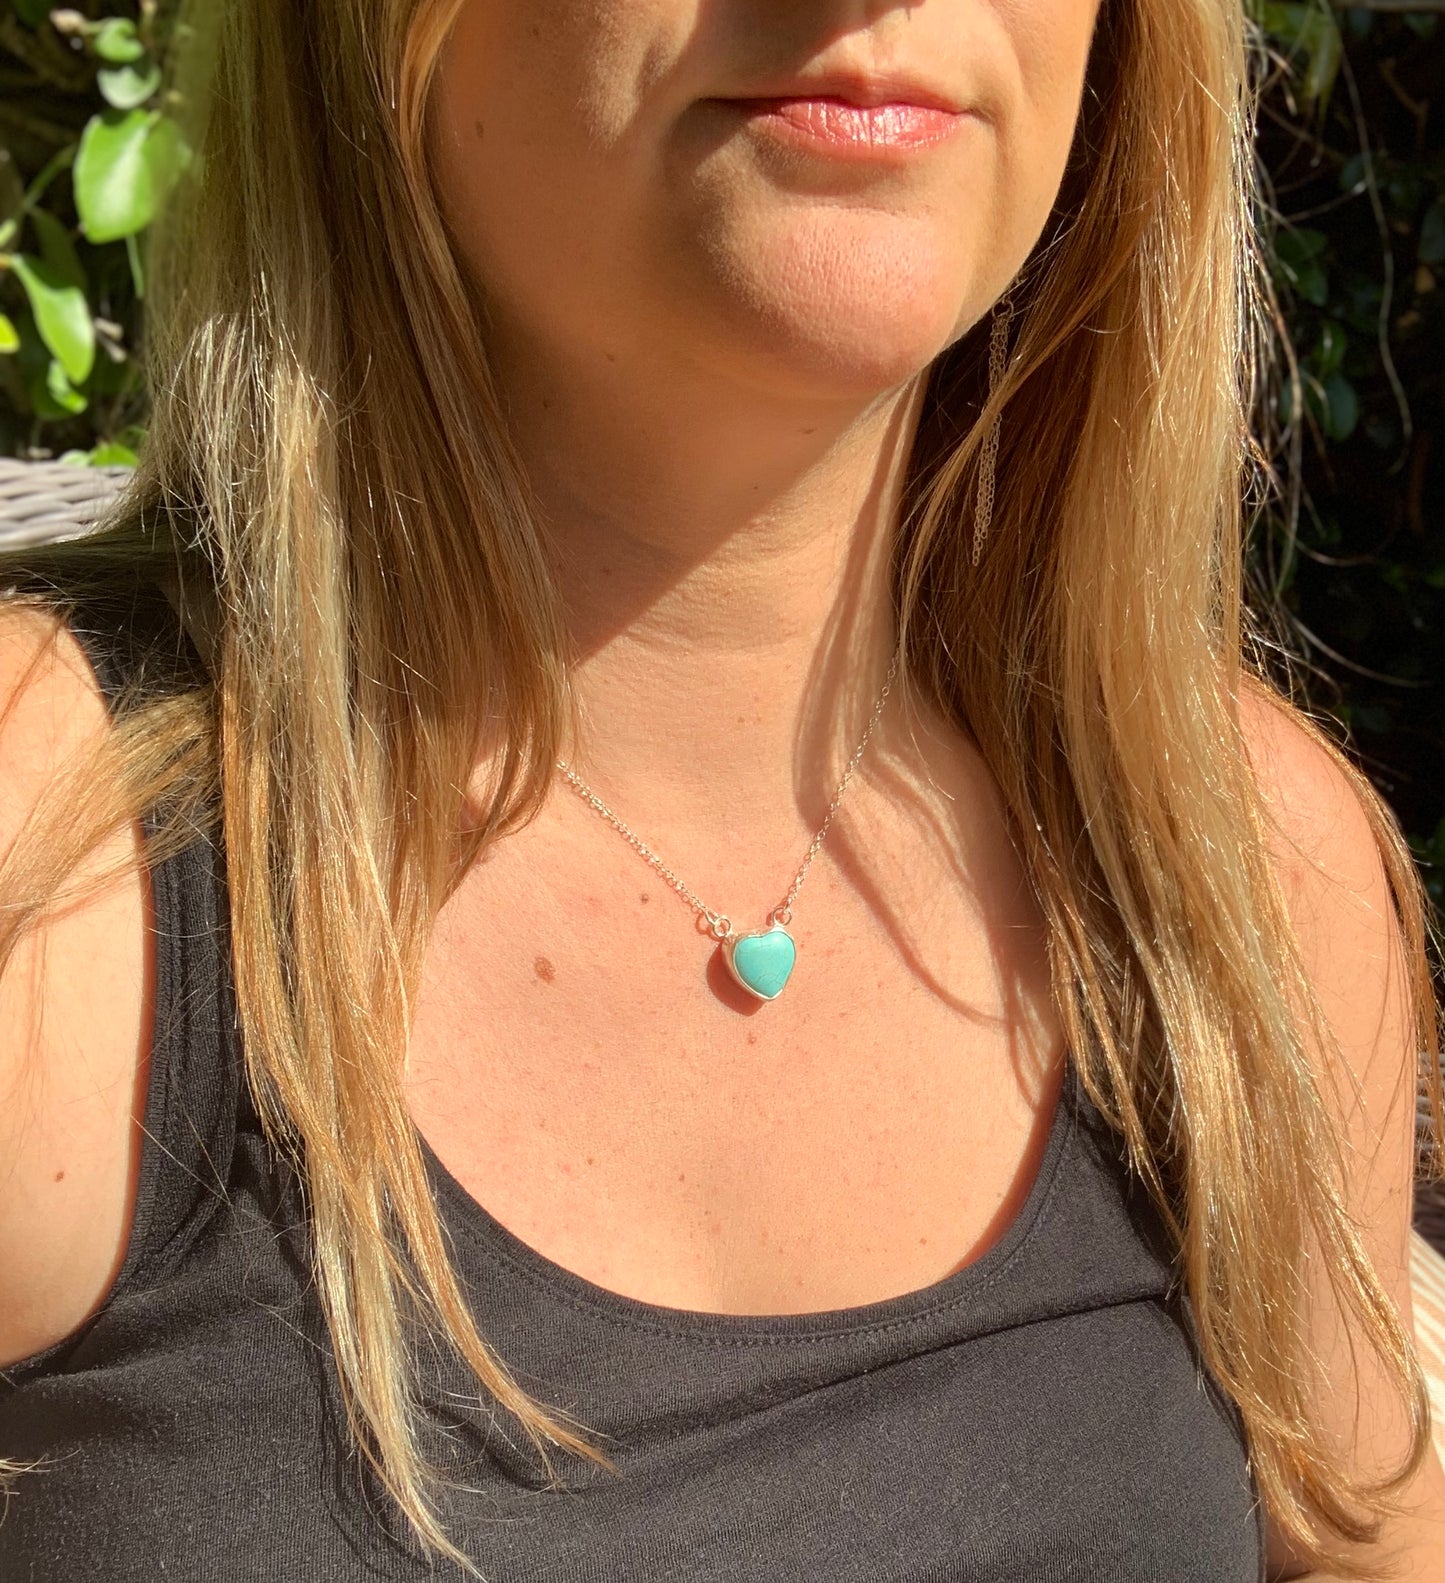 Turquoise Howlite Heart Necklace #110 - Jennifer Cervelli Jewelry